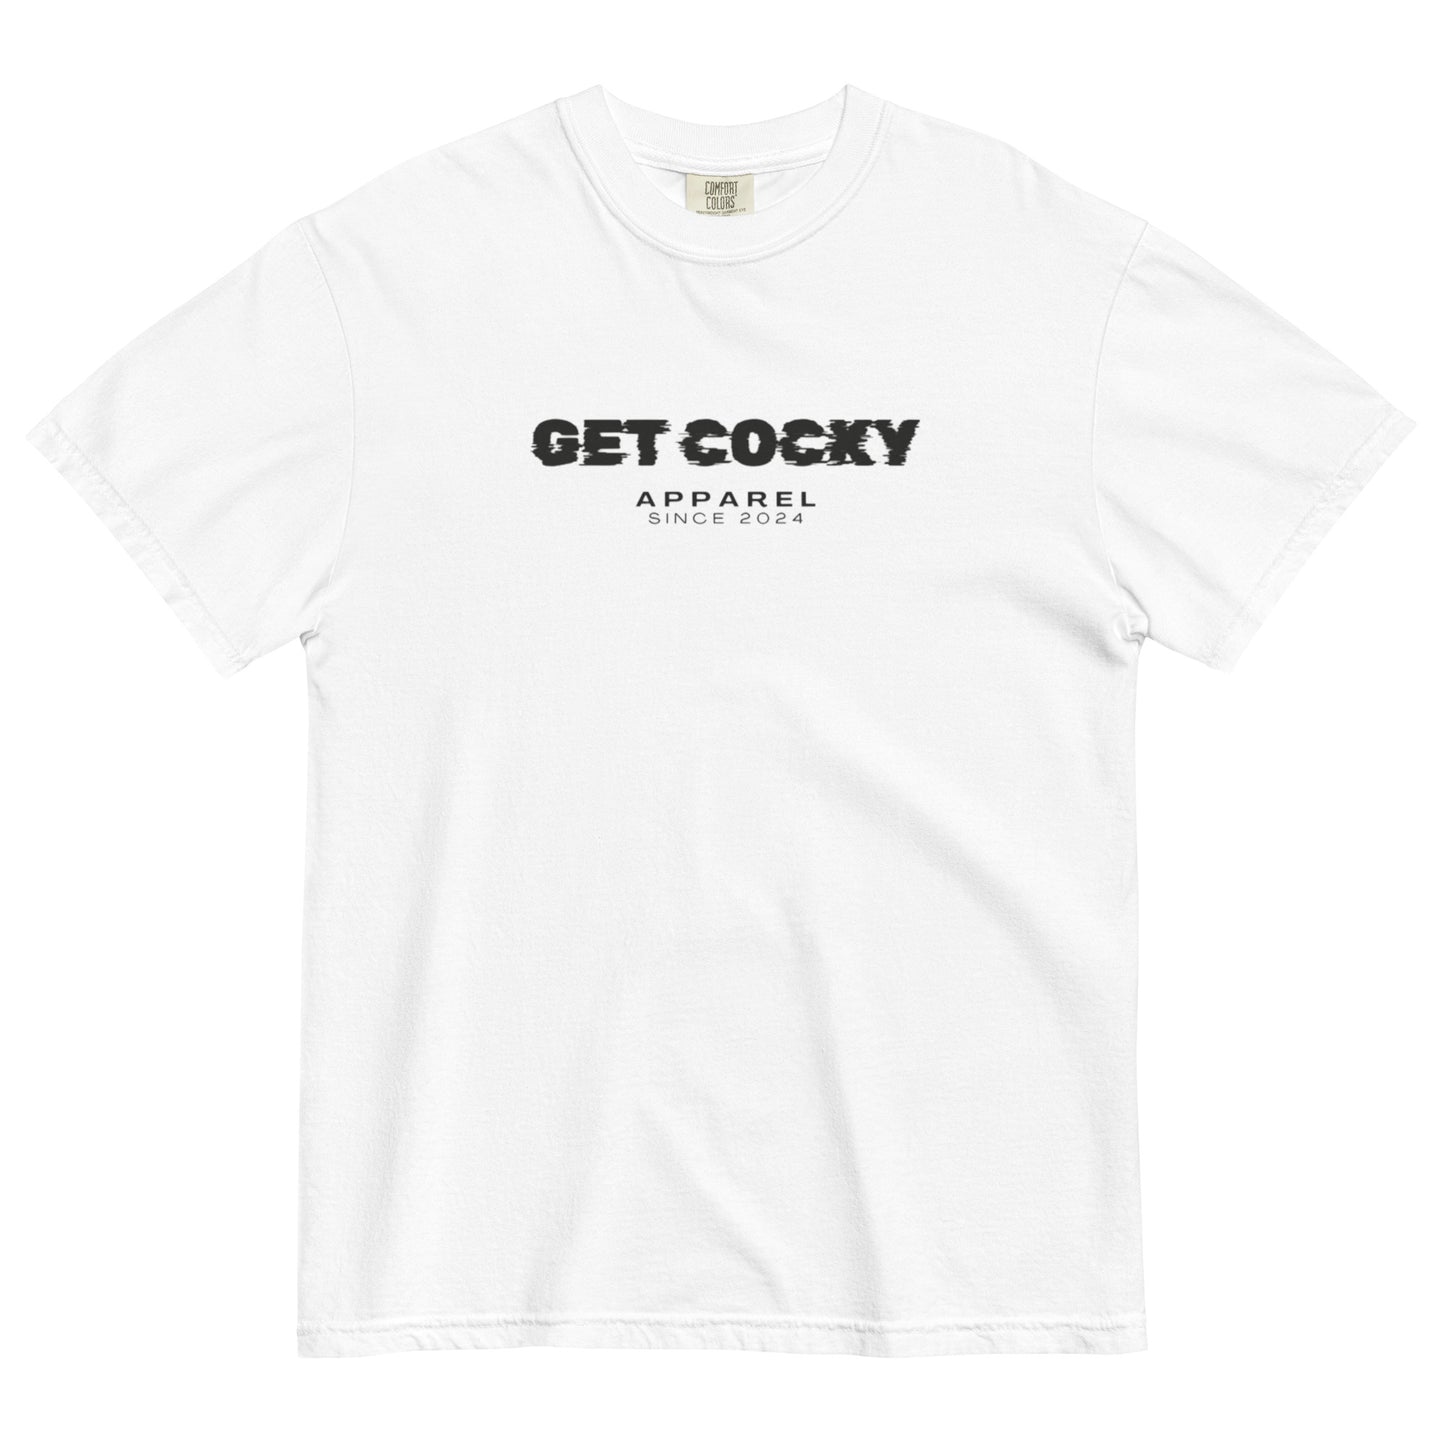 Get Cocky Apparel Tee